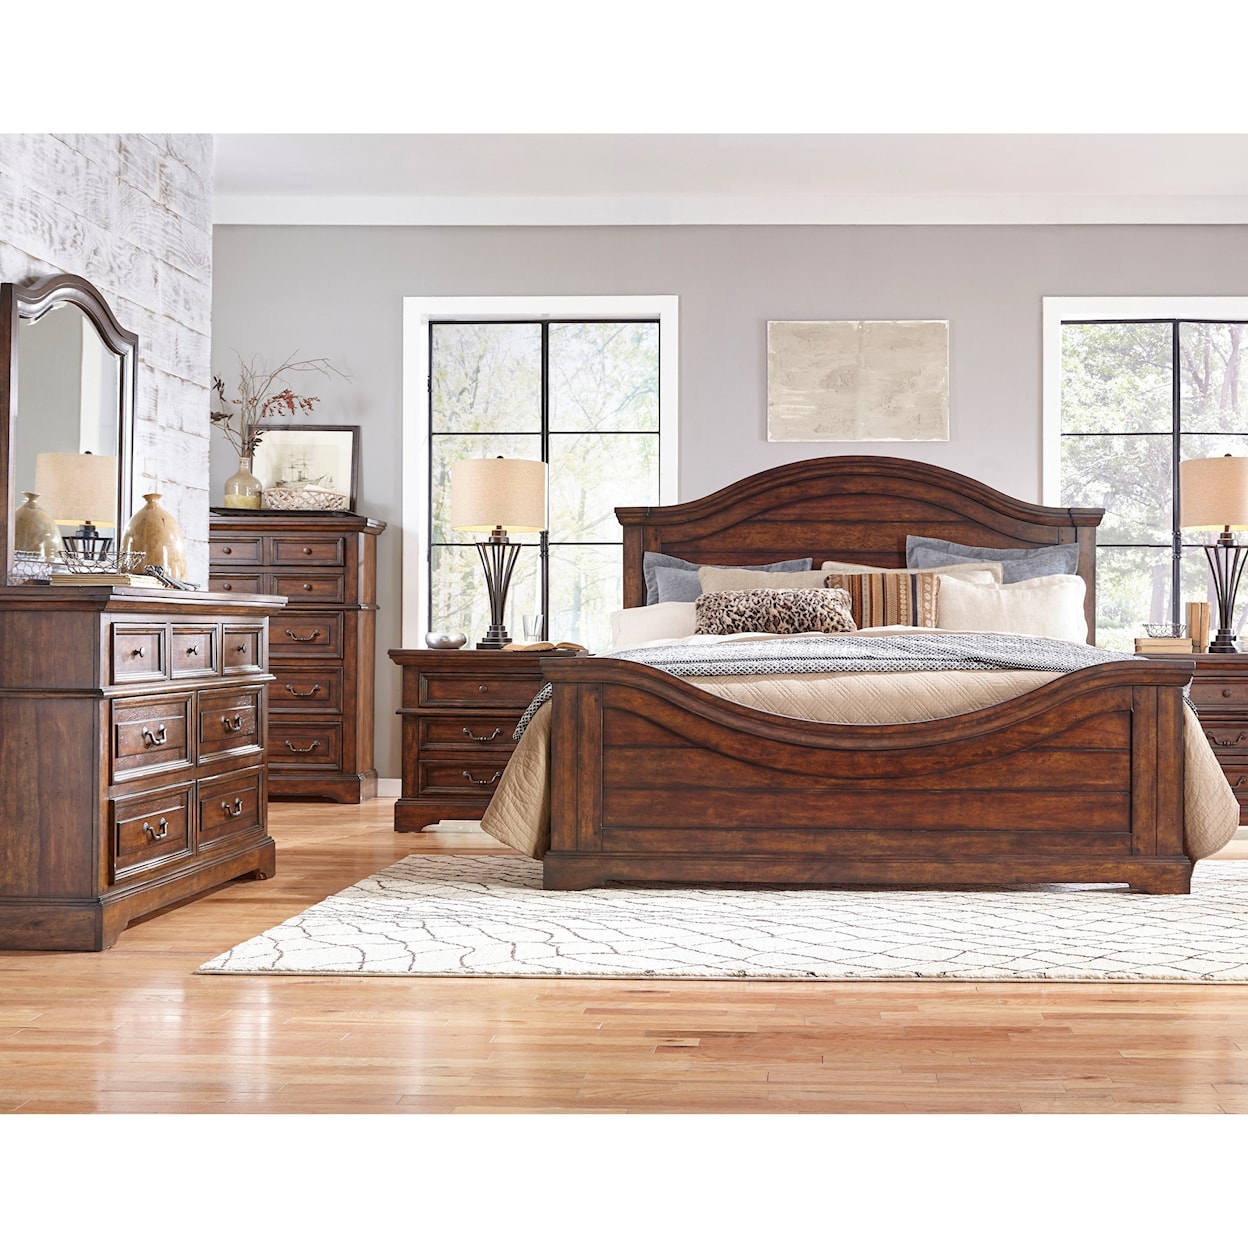 American Woodcrafters Stonebrook King Bedroom Group